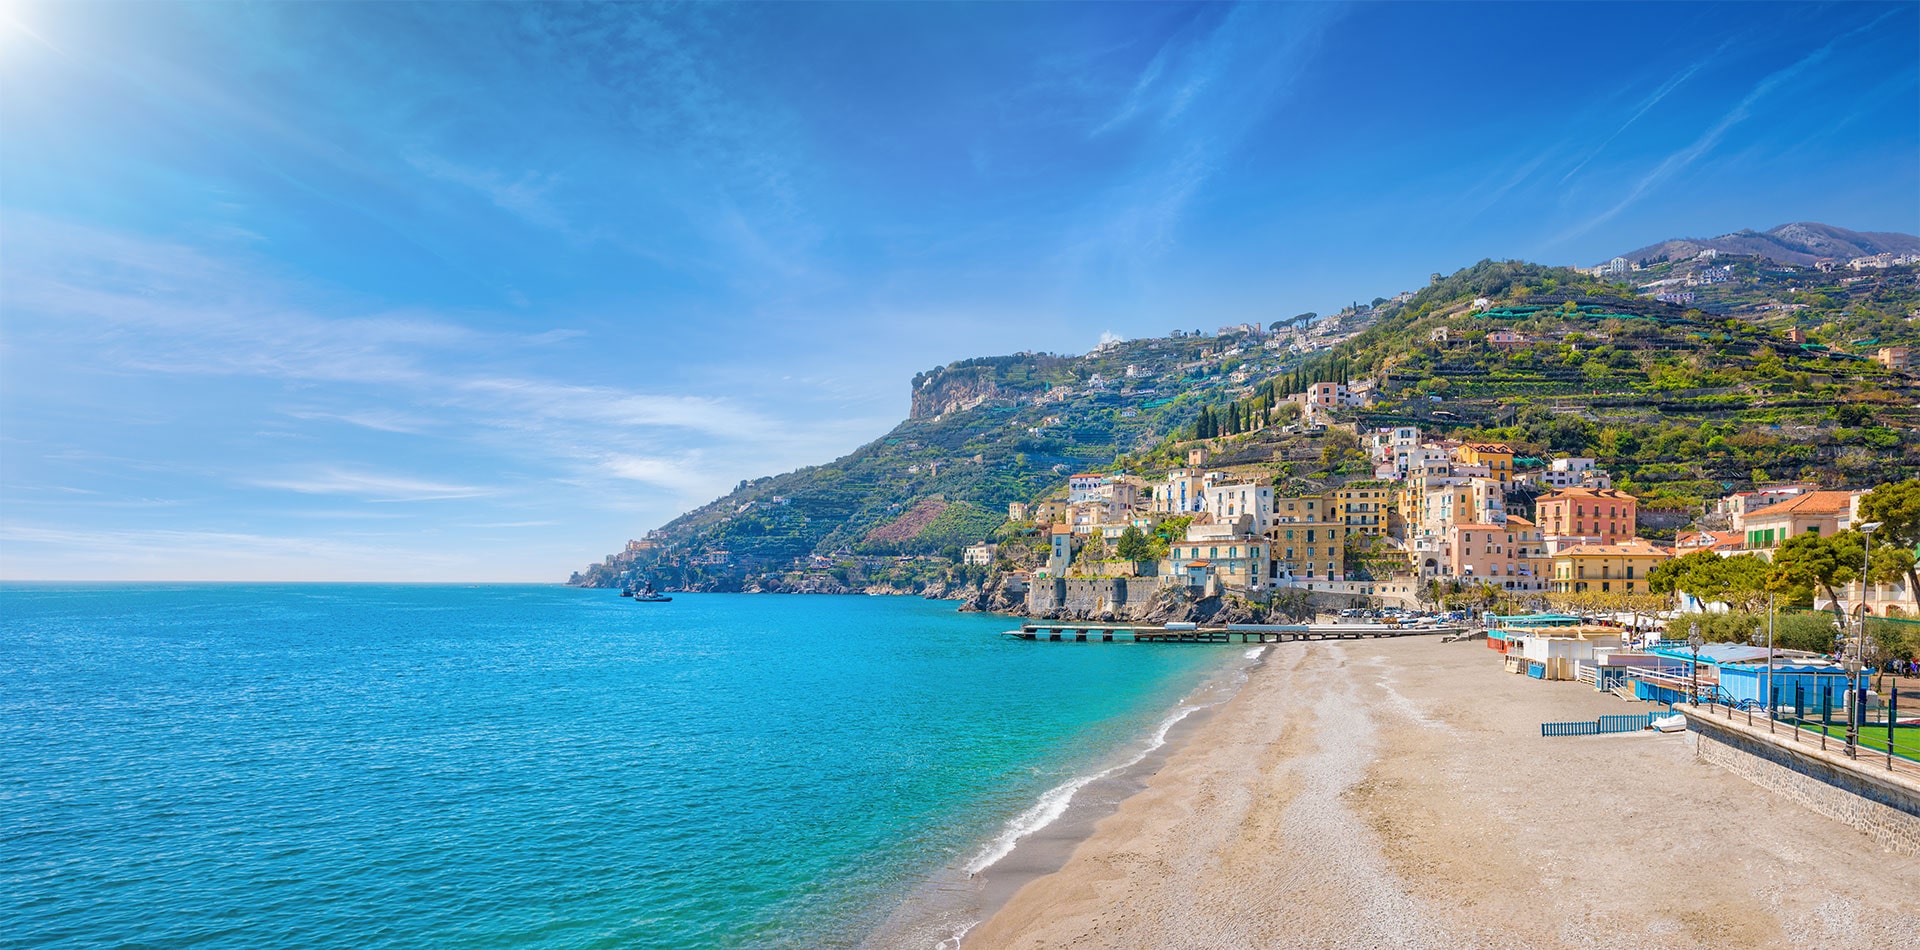 Beautiful views of the Amalfi coast, Italy